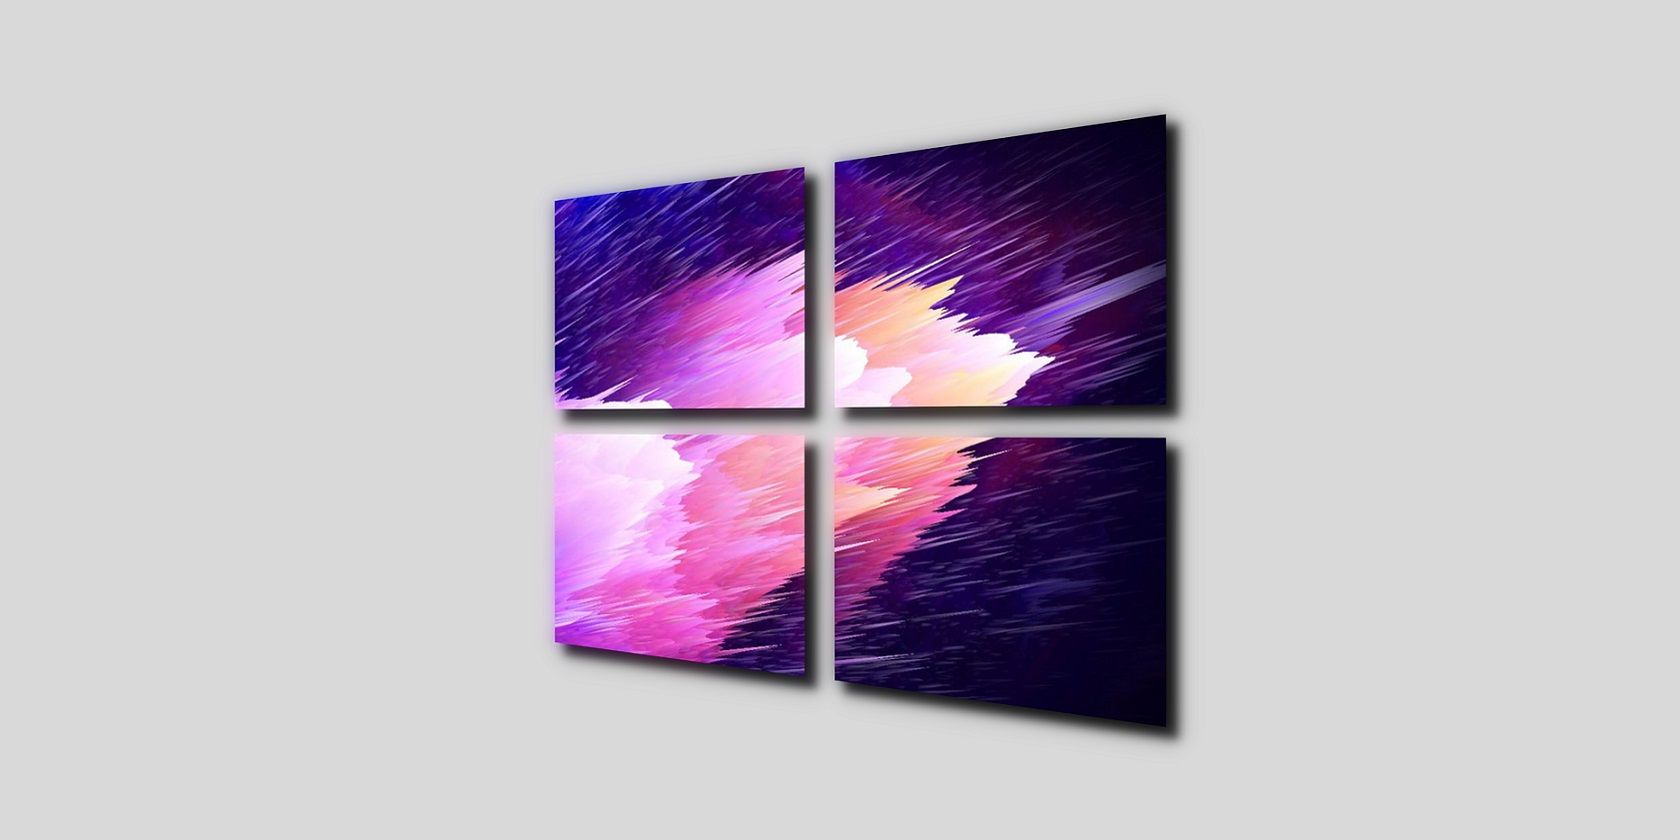 The Microsoft Windows logo with a purple design inside